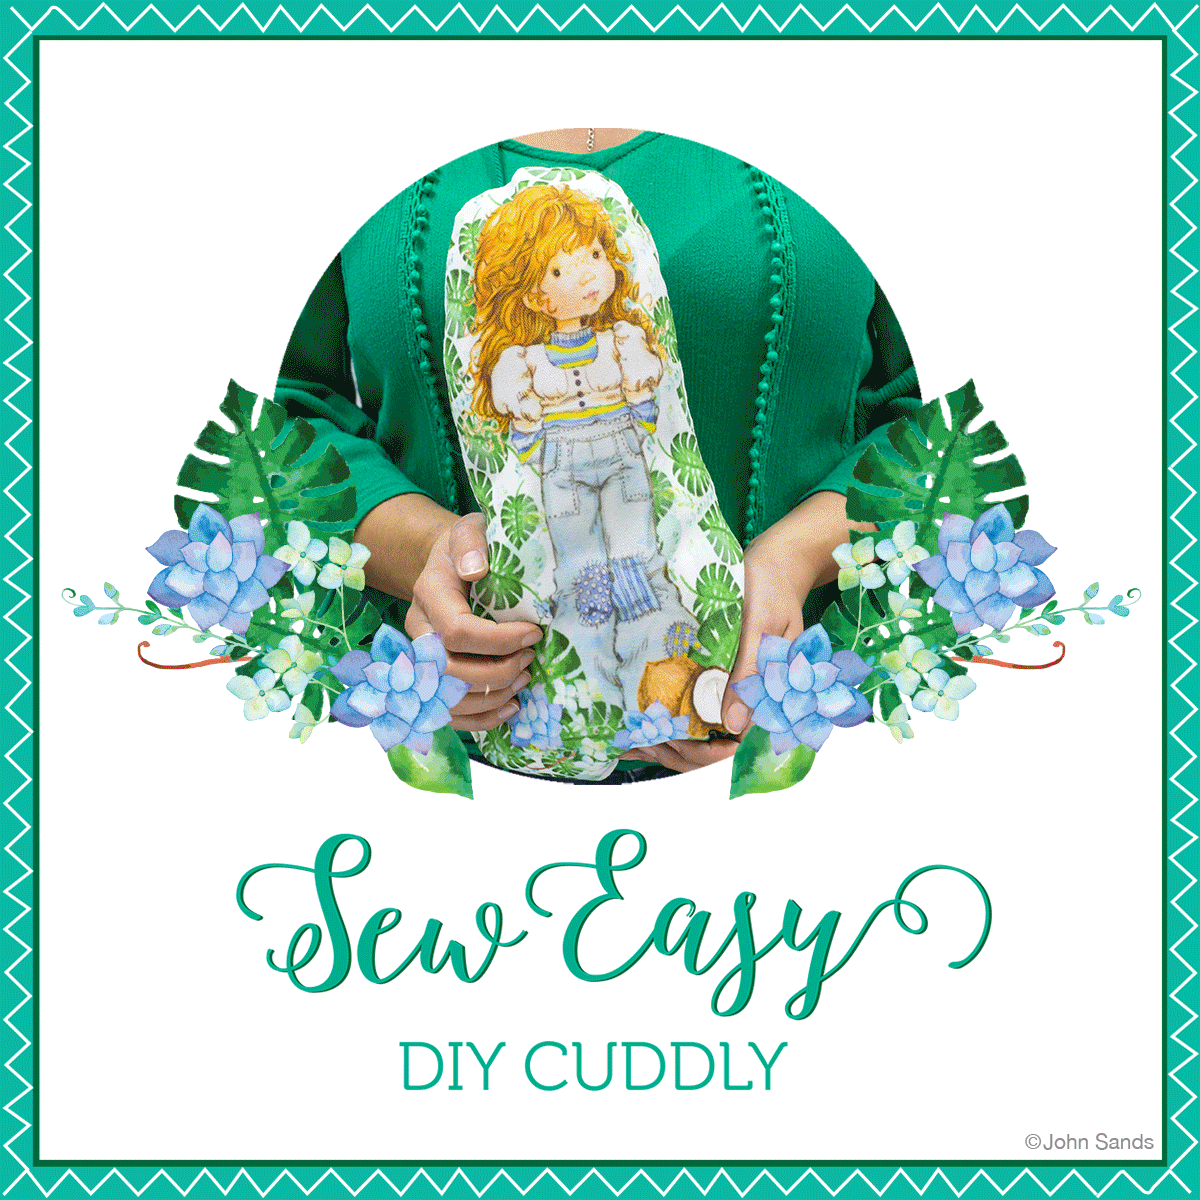 Make it!  Sarah Kay Sew Easy DIY Cuddly Doll